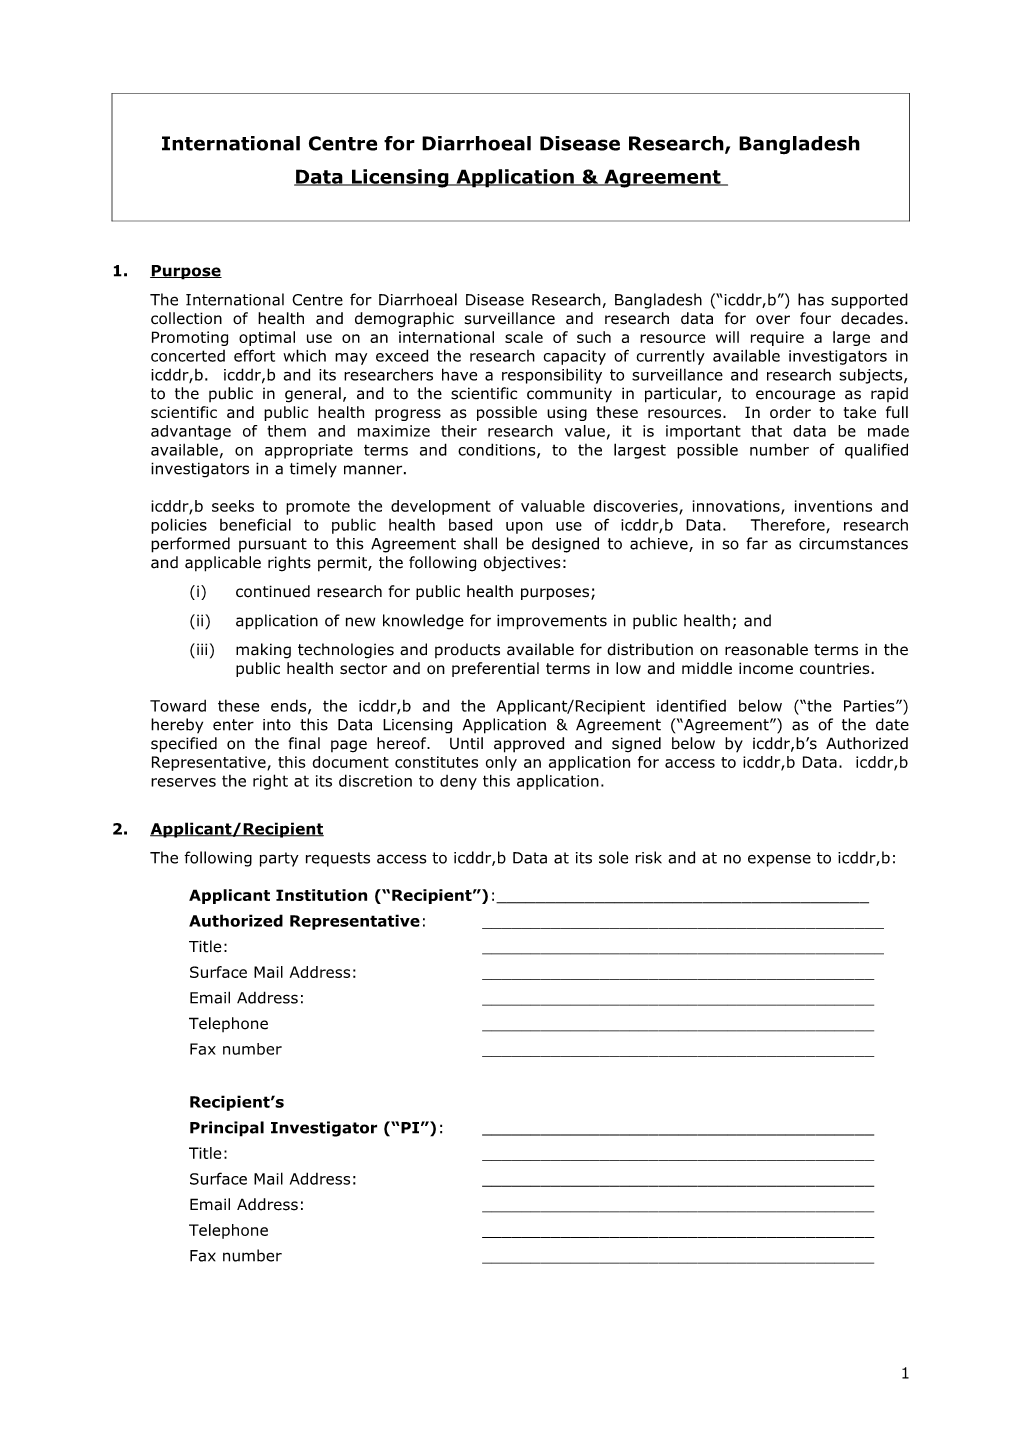 Data Distribution Application & Agreement Form